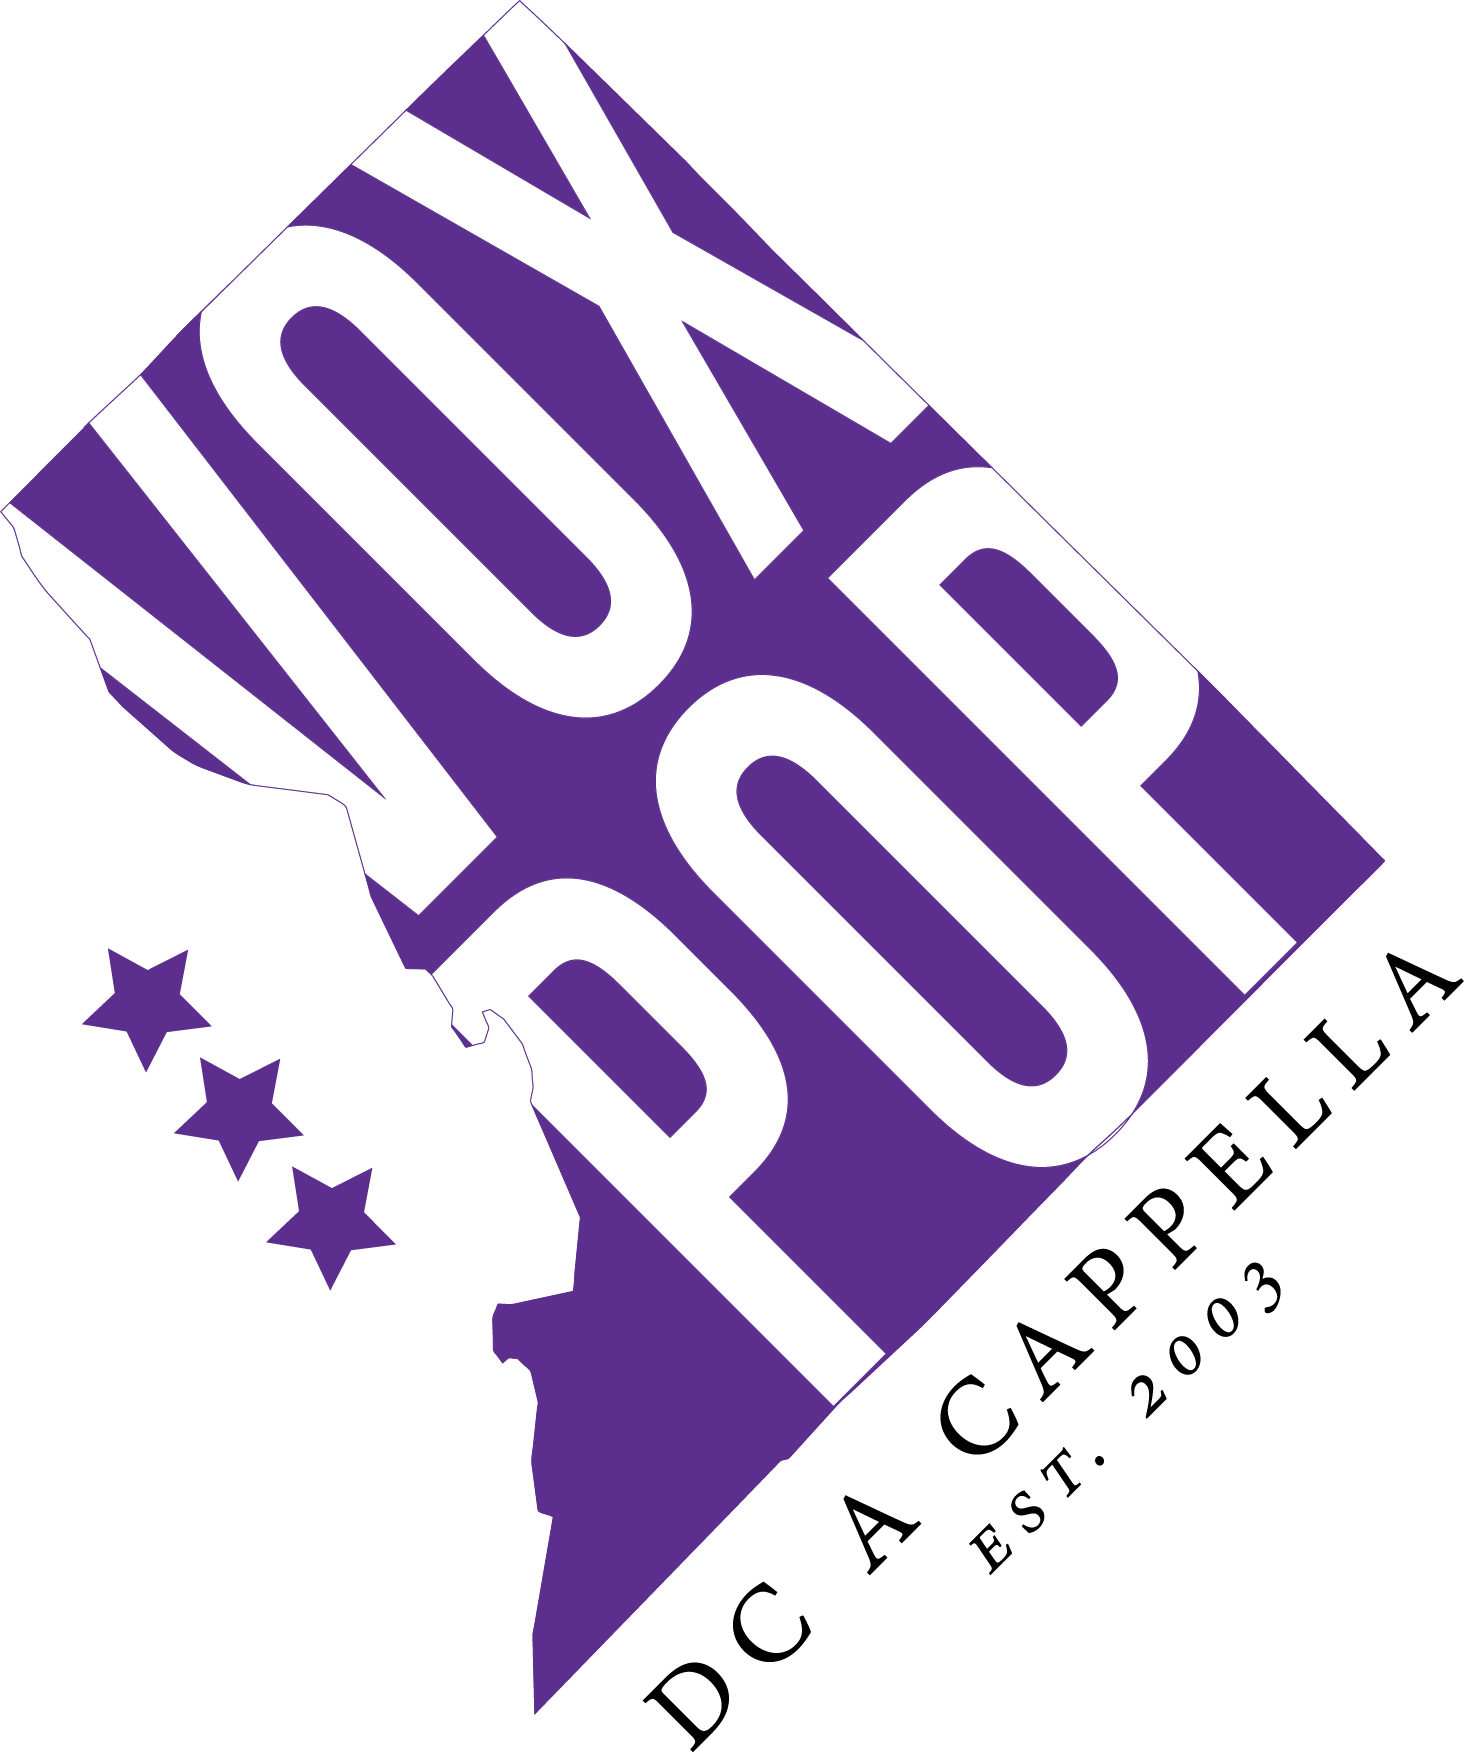 Vox Pop logo